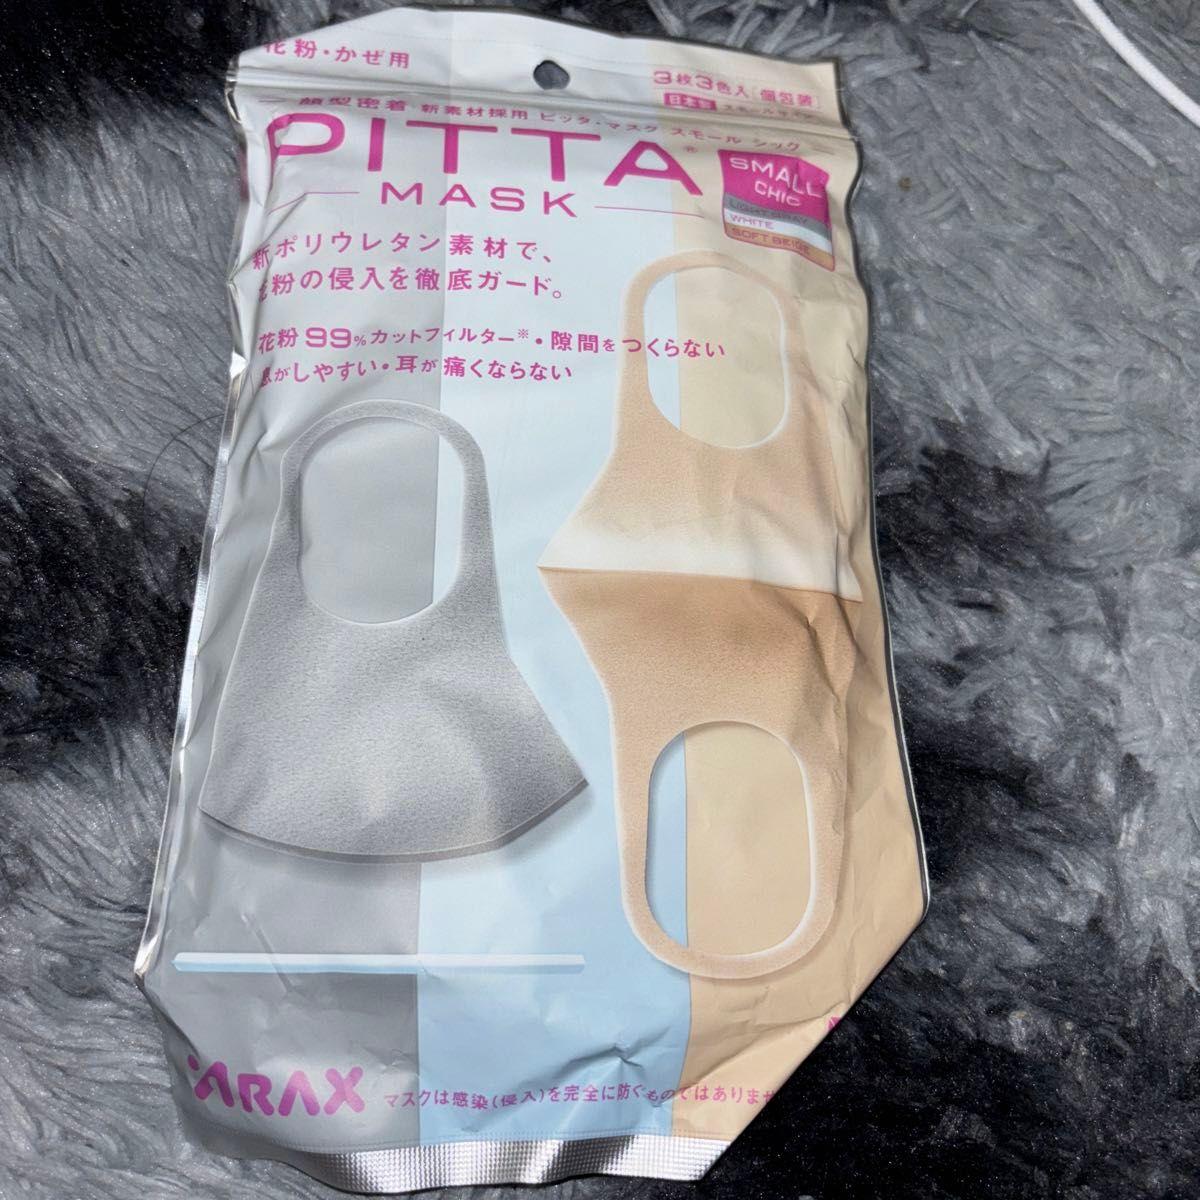 ARAX PITTA MASK SMALL CHIC LIGHT GRAY/WHITE/SOFT BEIGE 個包装 3枚セット